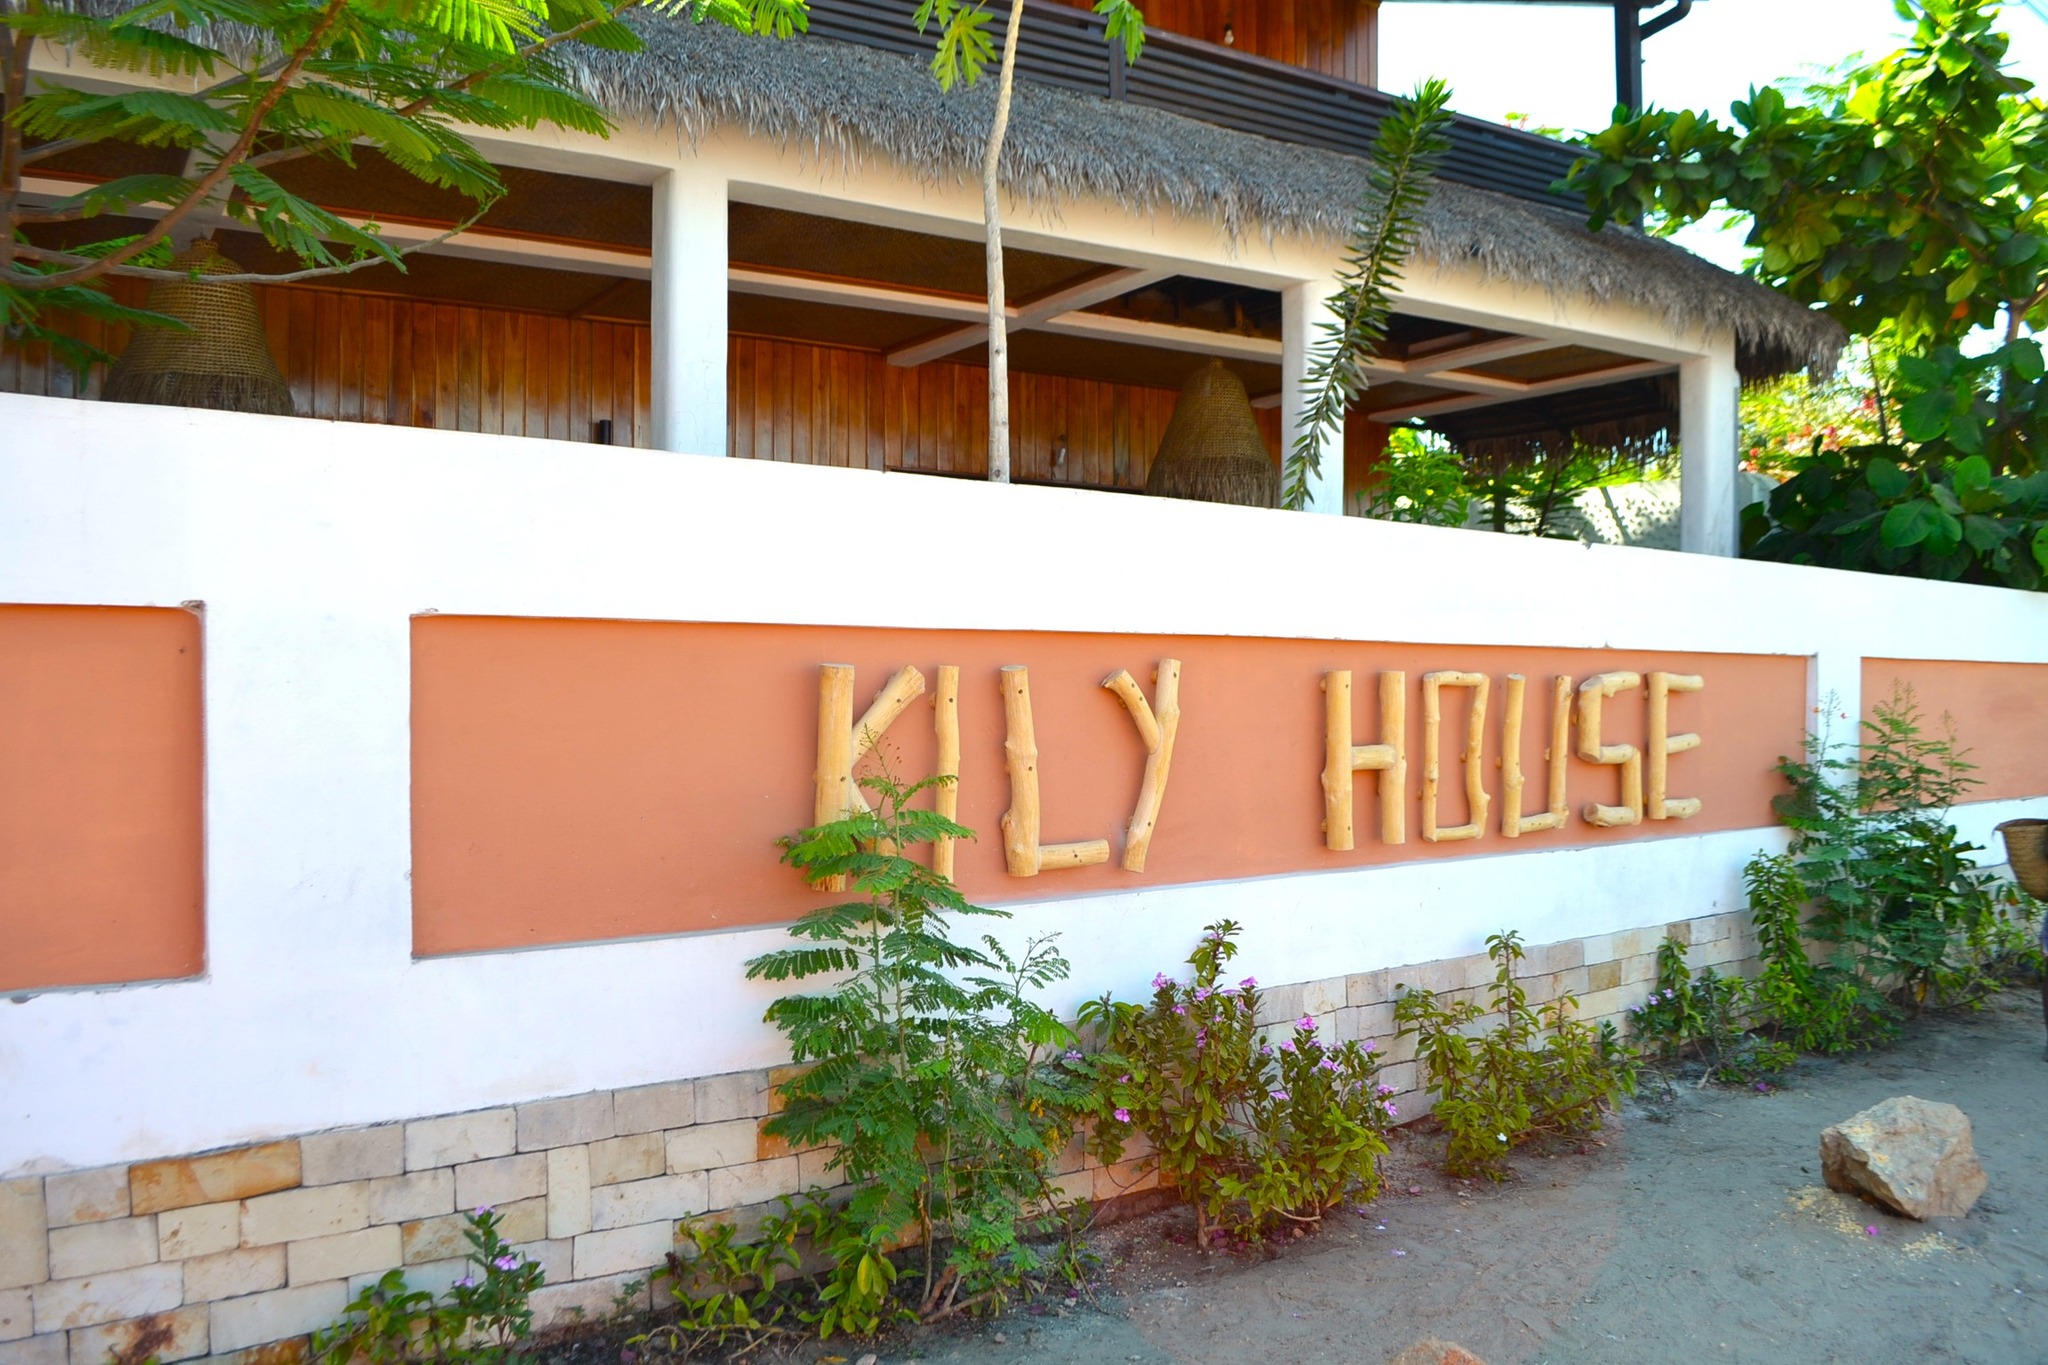 Kily House